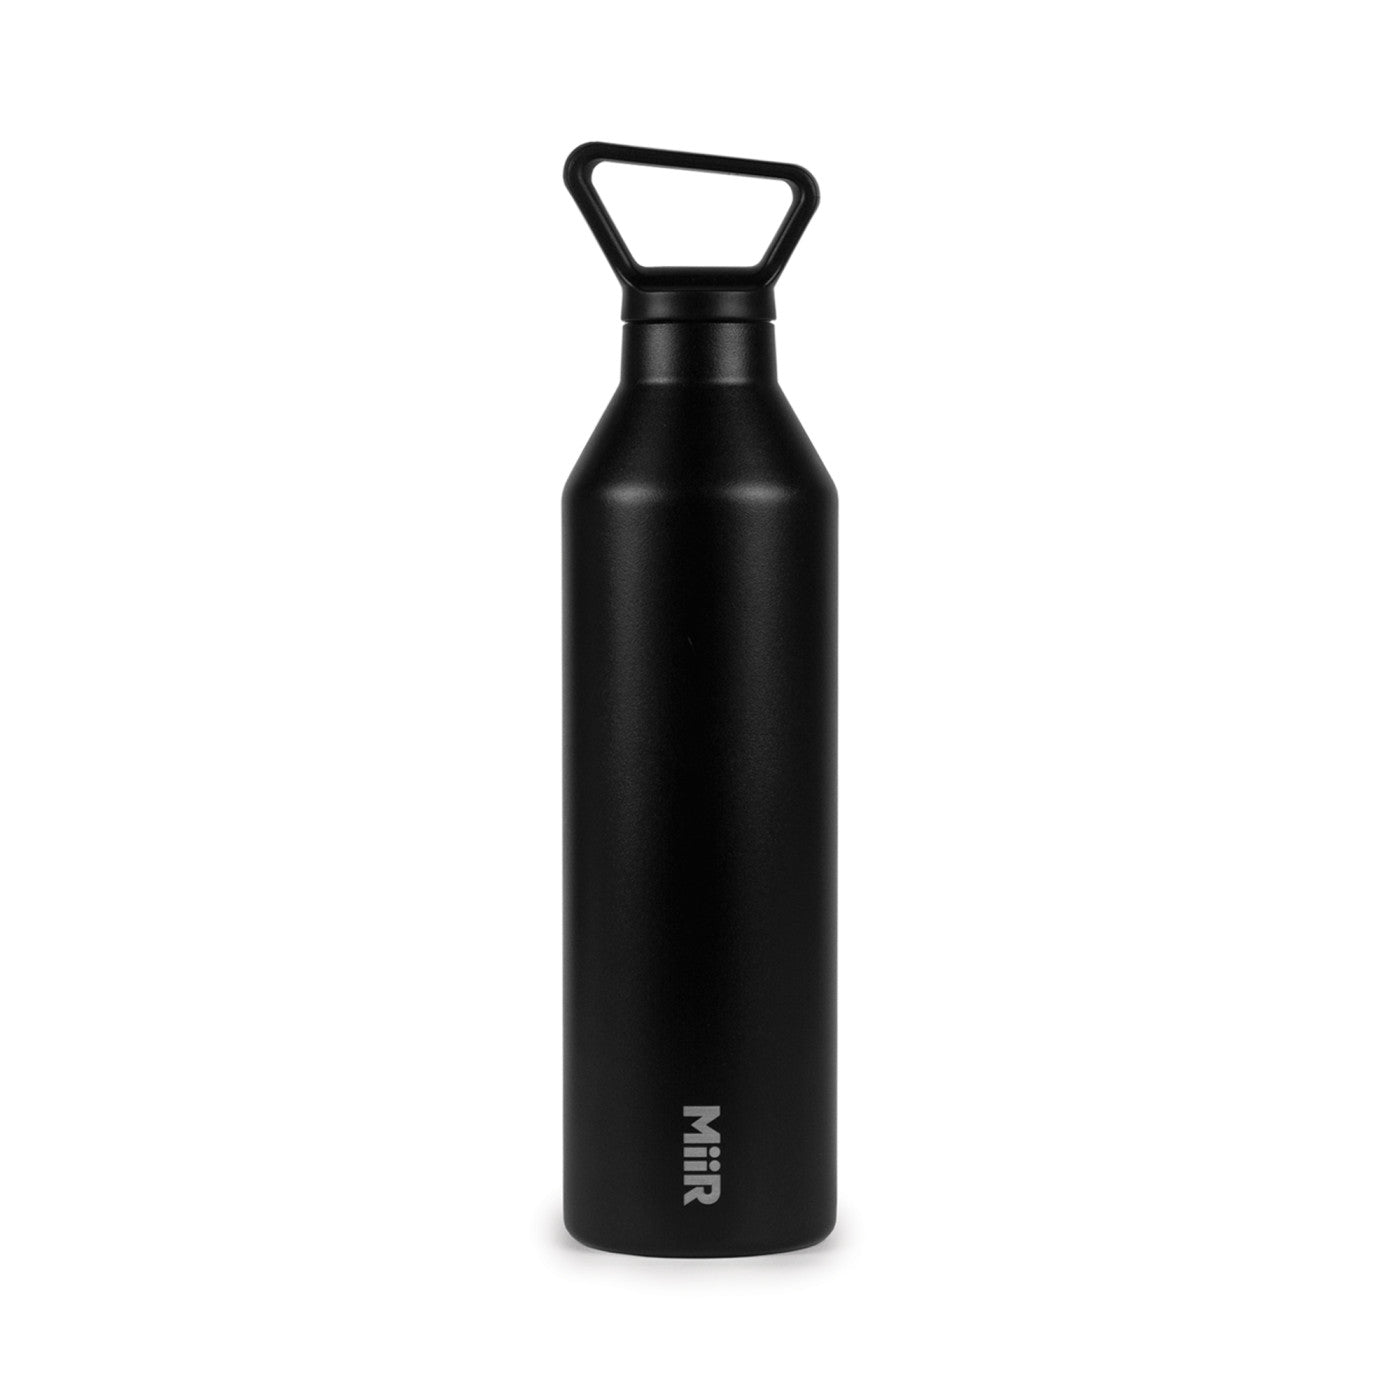 Customizable Miir 23 oz insulated water bottle in black.